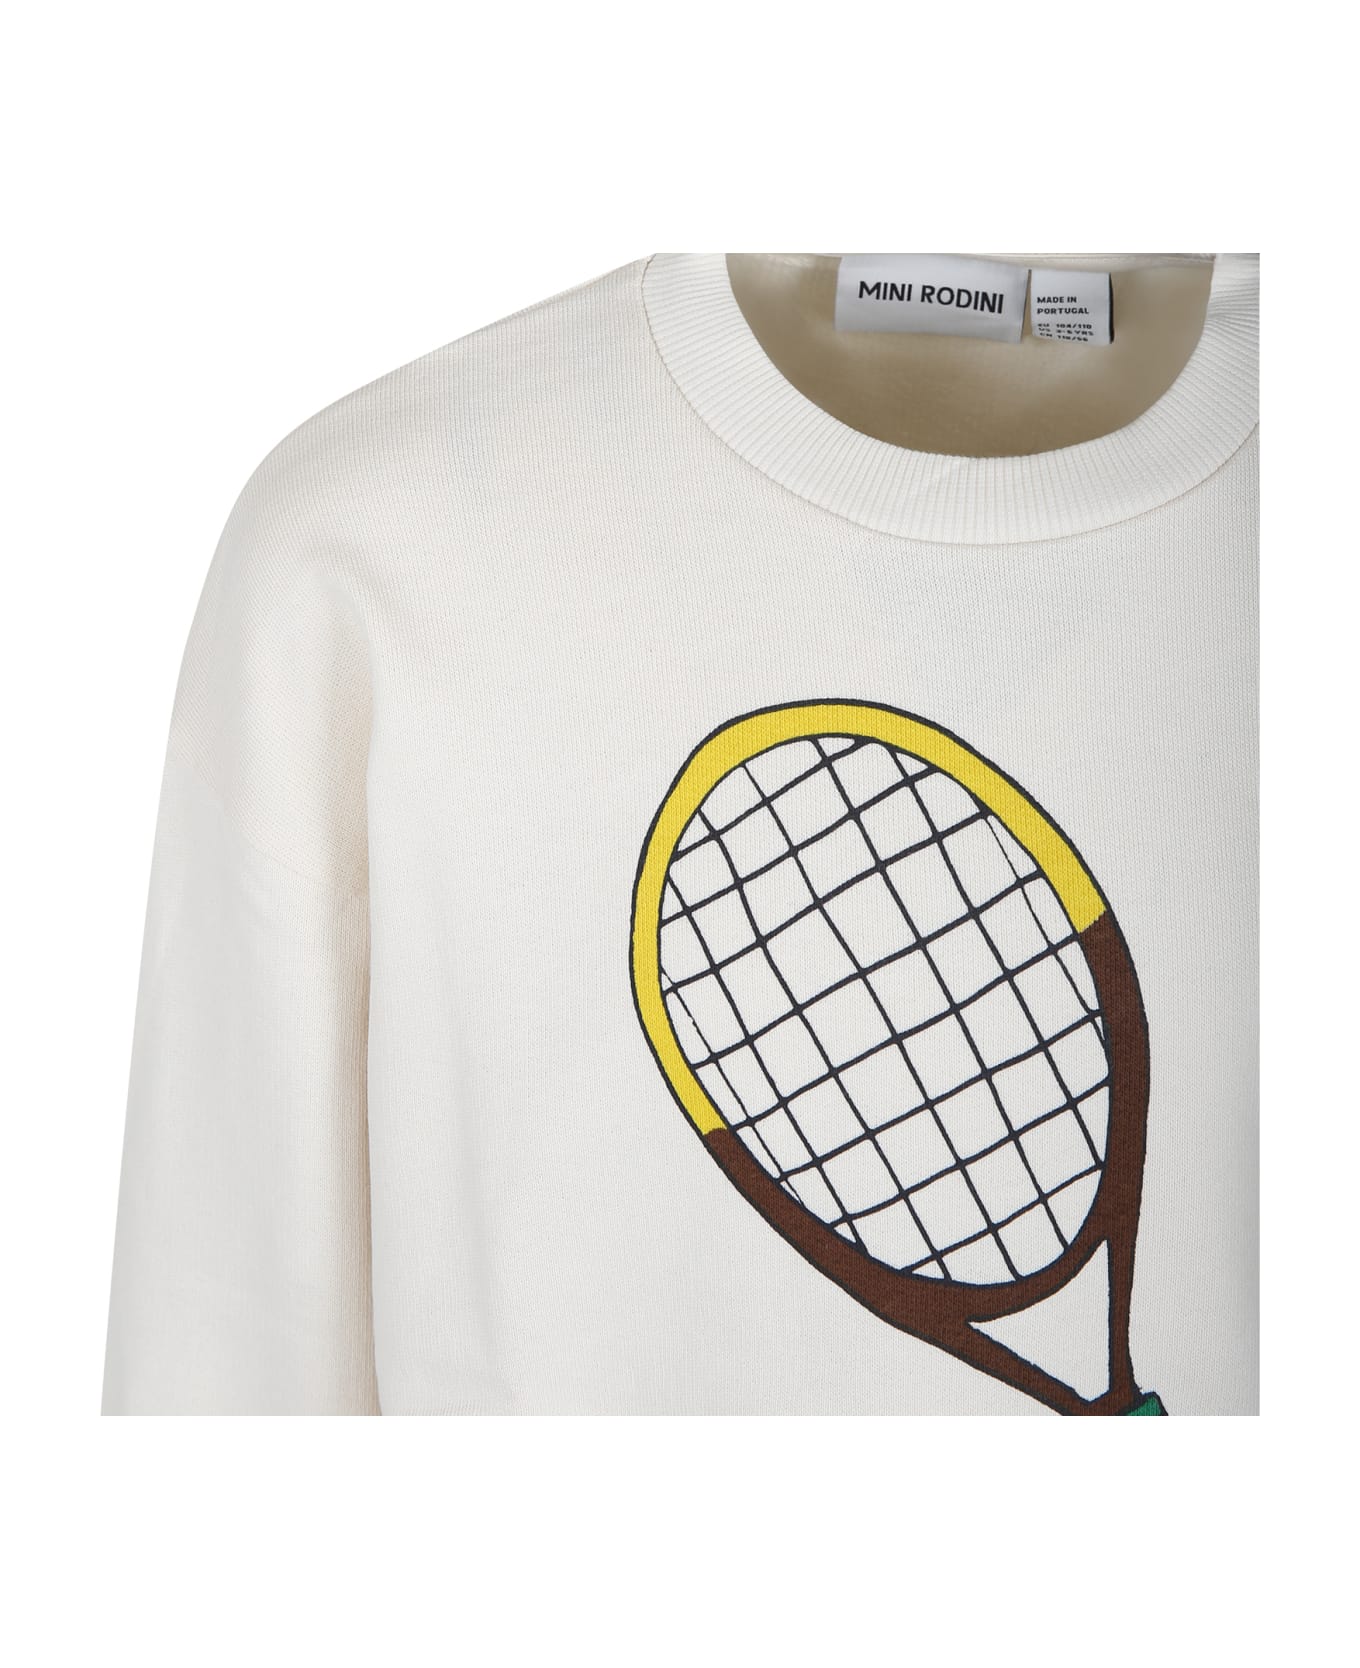 Mini Rodini Ivory Sweatshirt For Kids With Tennis Racket - Ivory